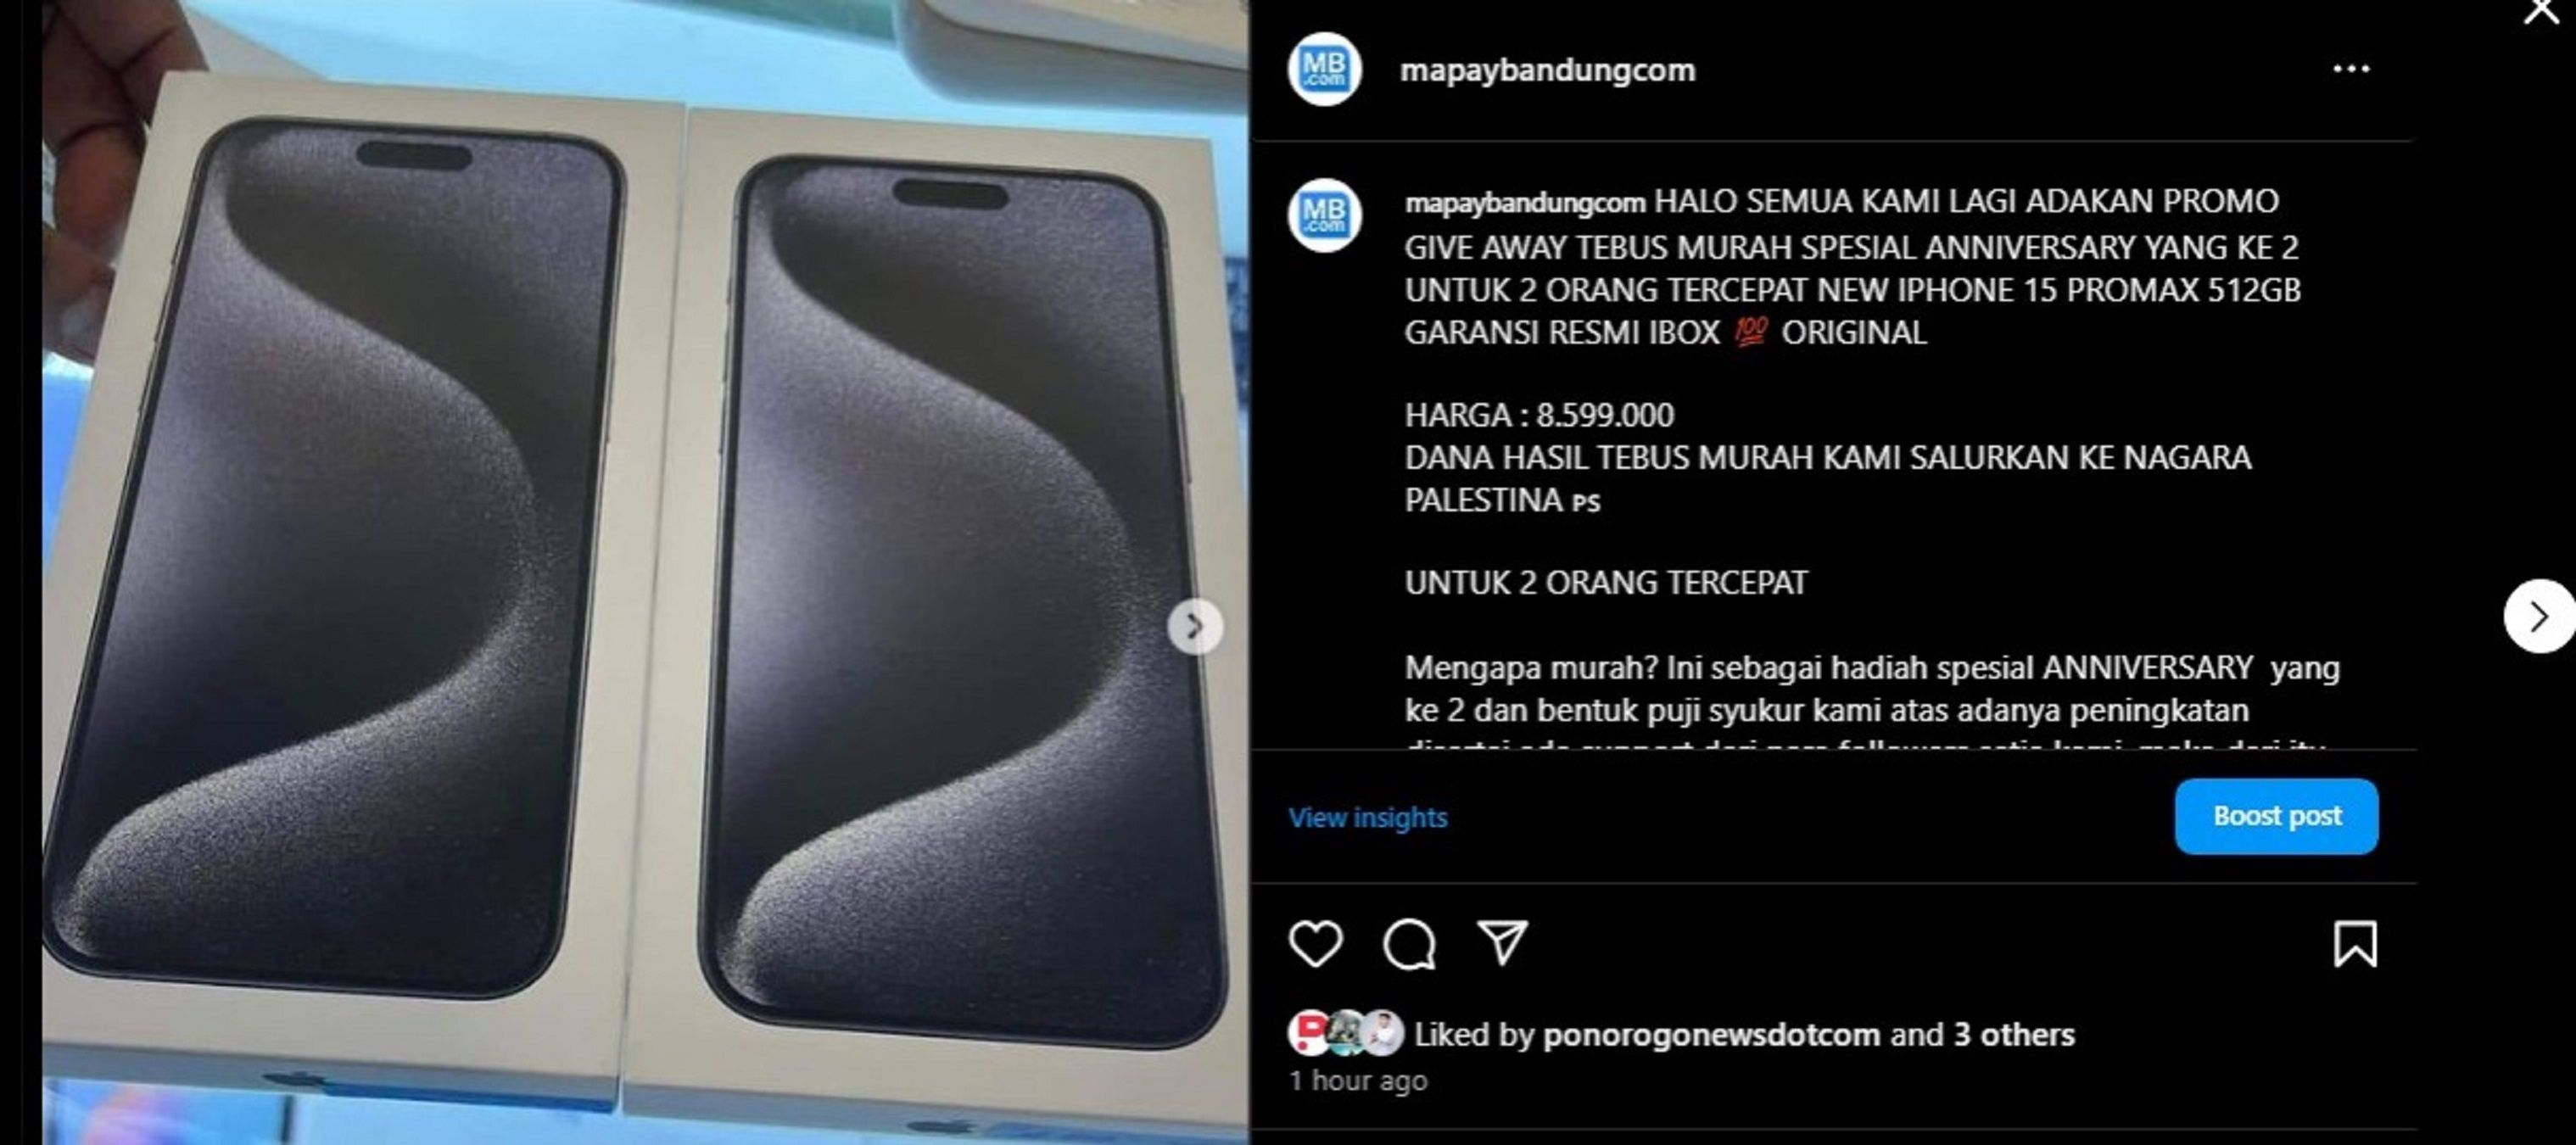 Breaking news, akun Instagram Mapay Bandung diretas pihak tak bertanggungjawab, hati-hati dengan modus penipuan ini. 